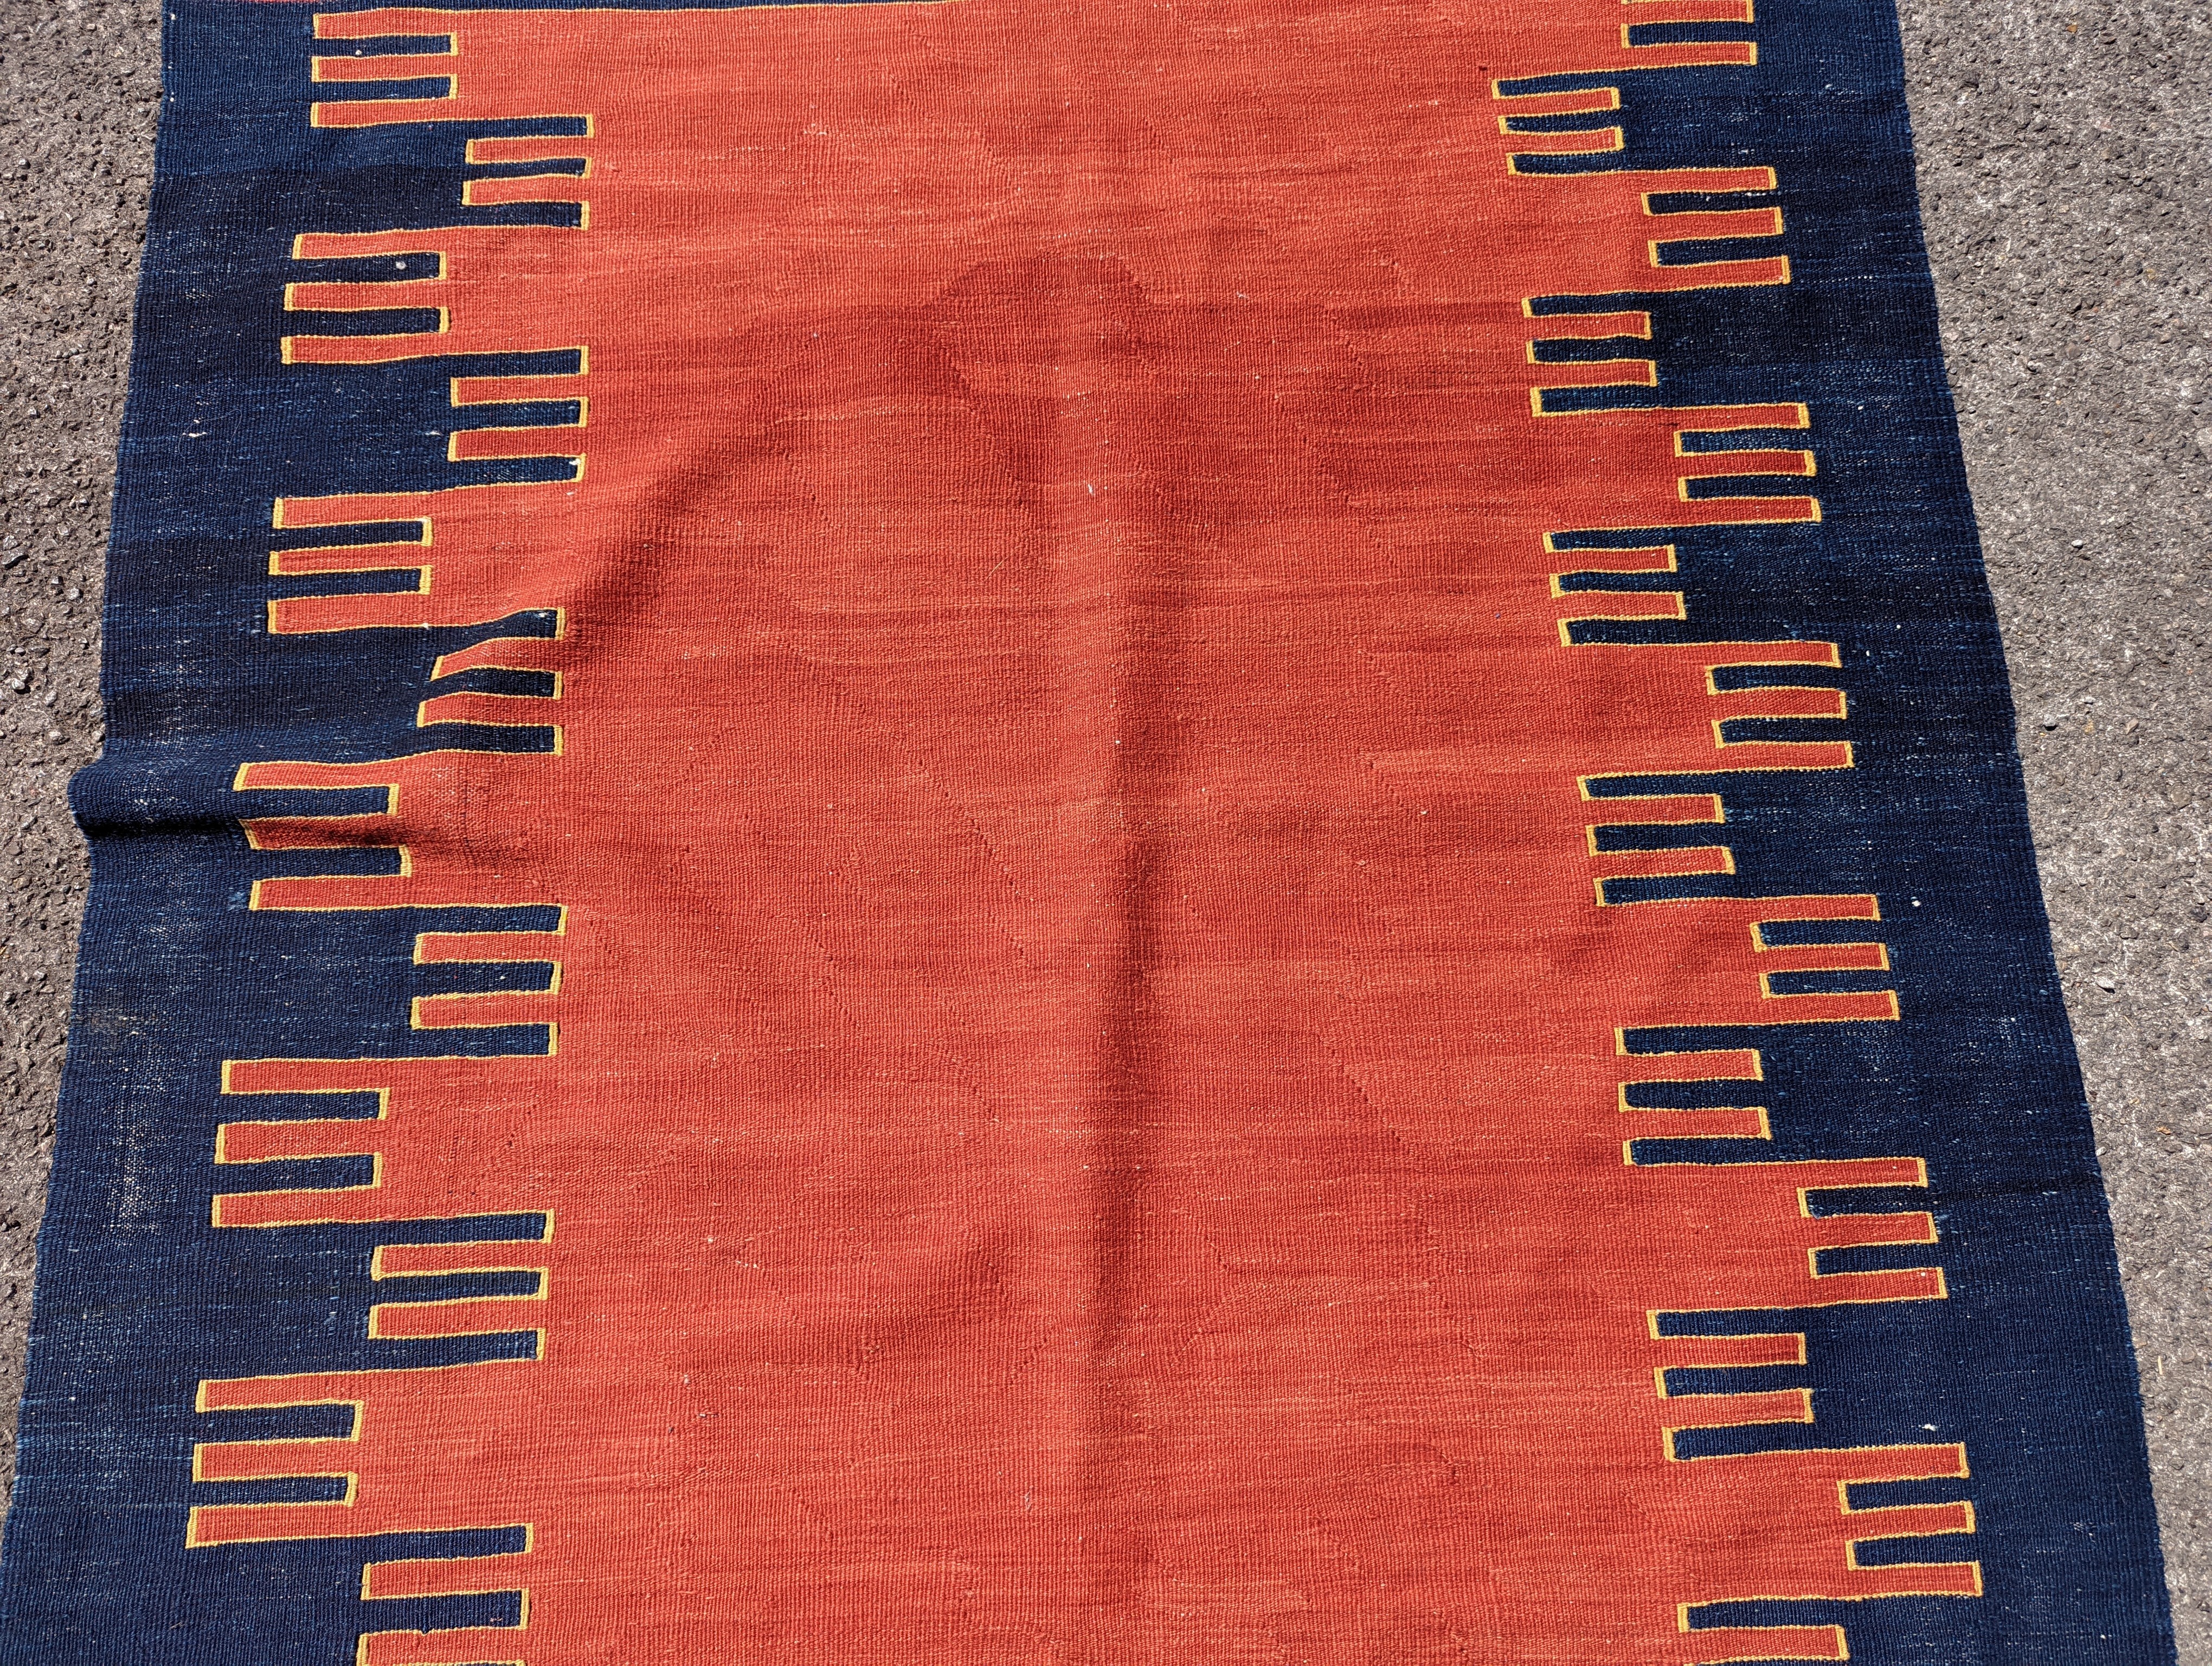 An Anatolian Kilim flatweave rug, 160 x 120cm